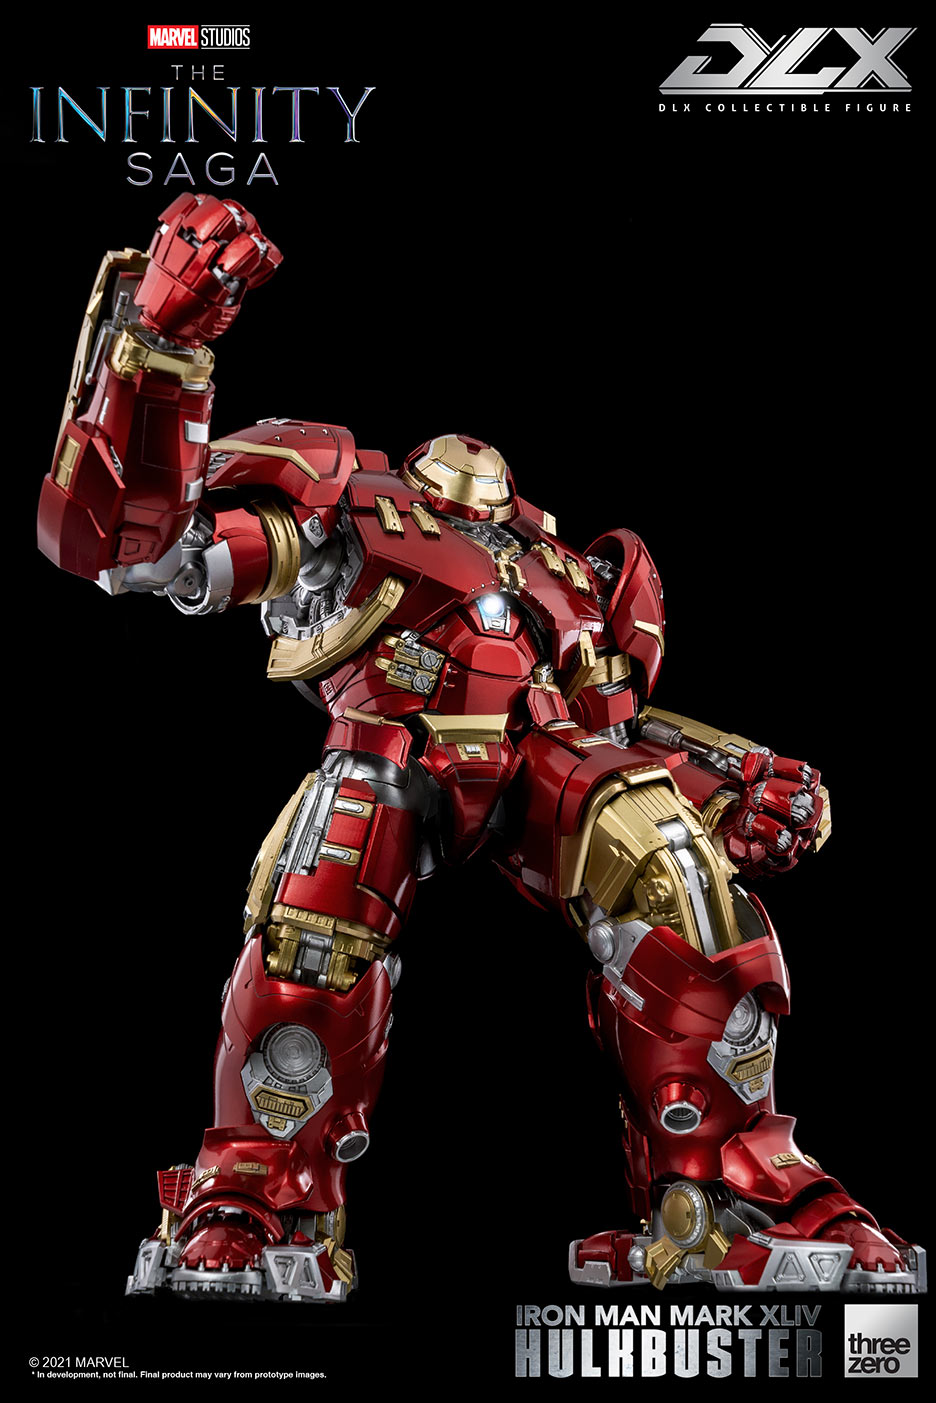 Marvel Studios: The Infinity Saga, DLX Iron Man Mark 44 “Hulkbuster”